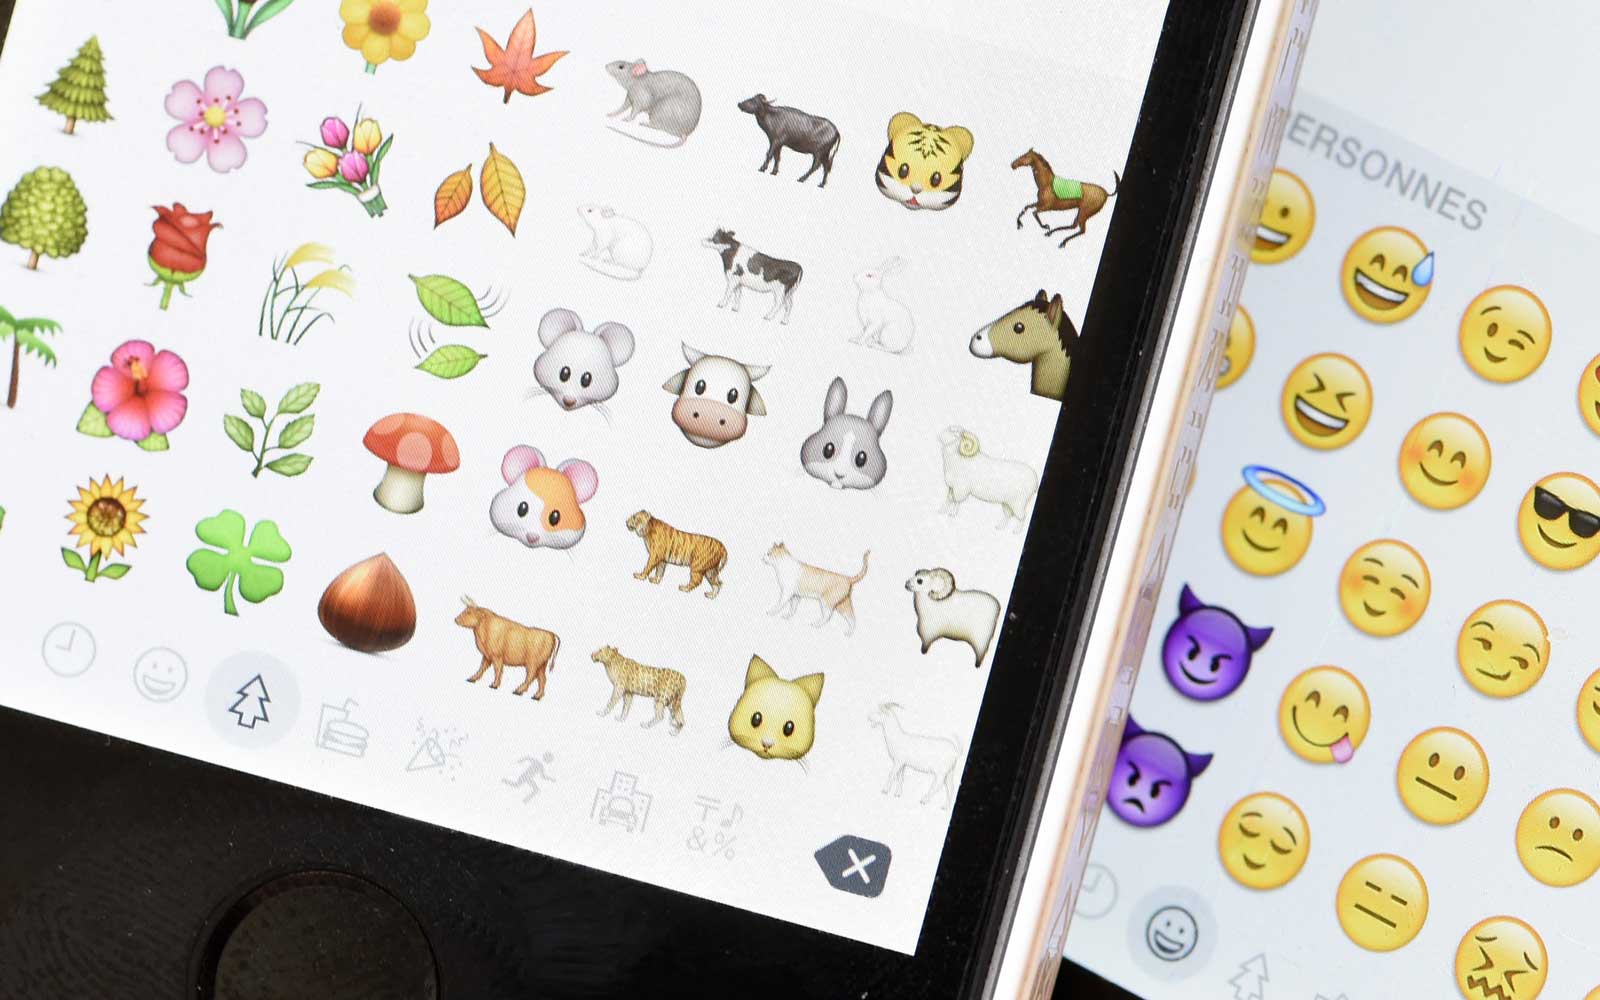 The Most Popular Emoji on Instagram in 2016